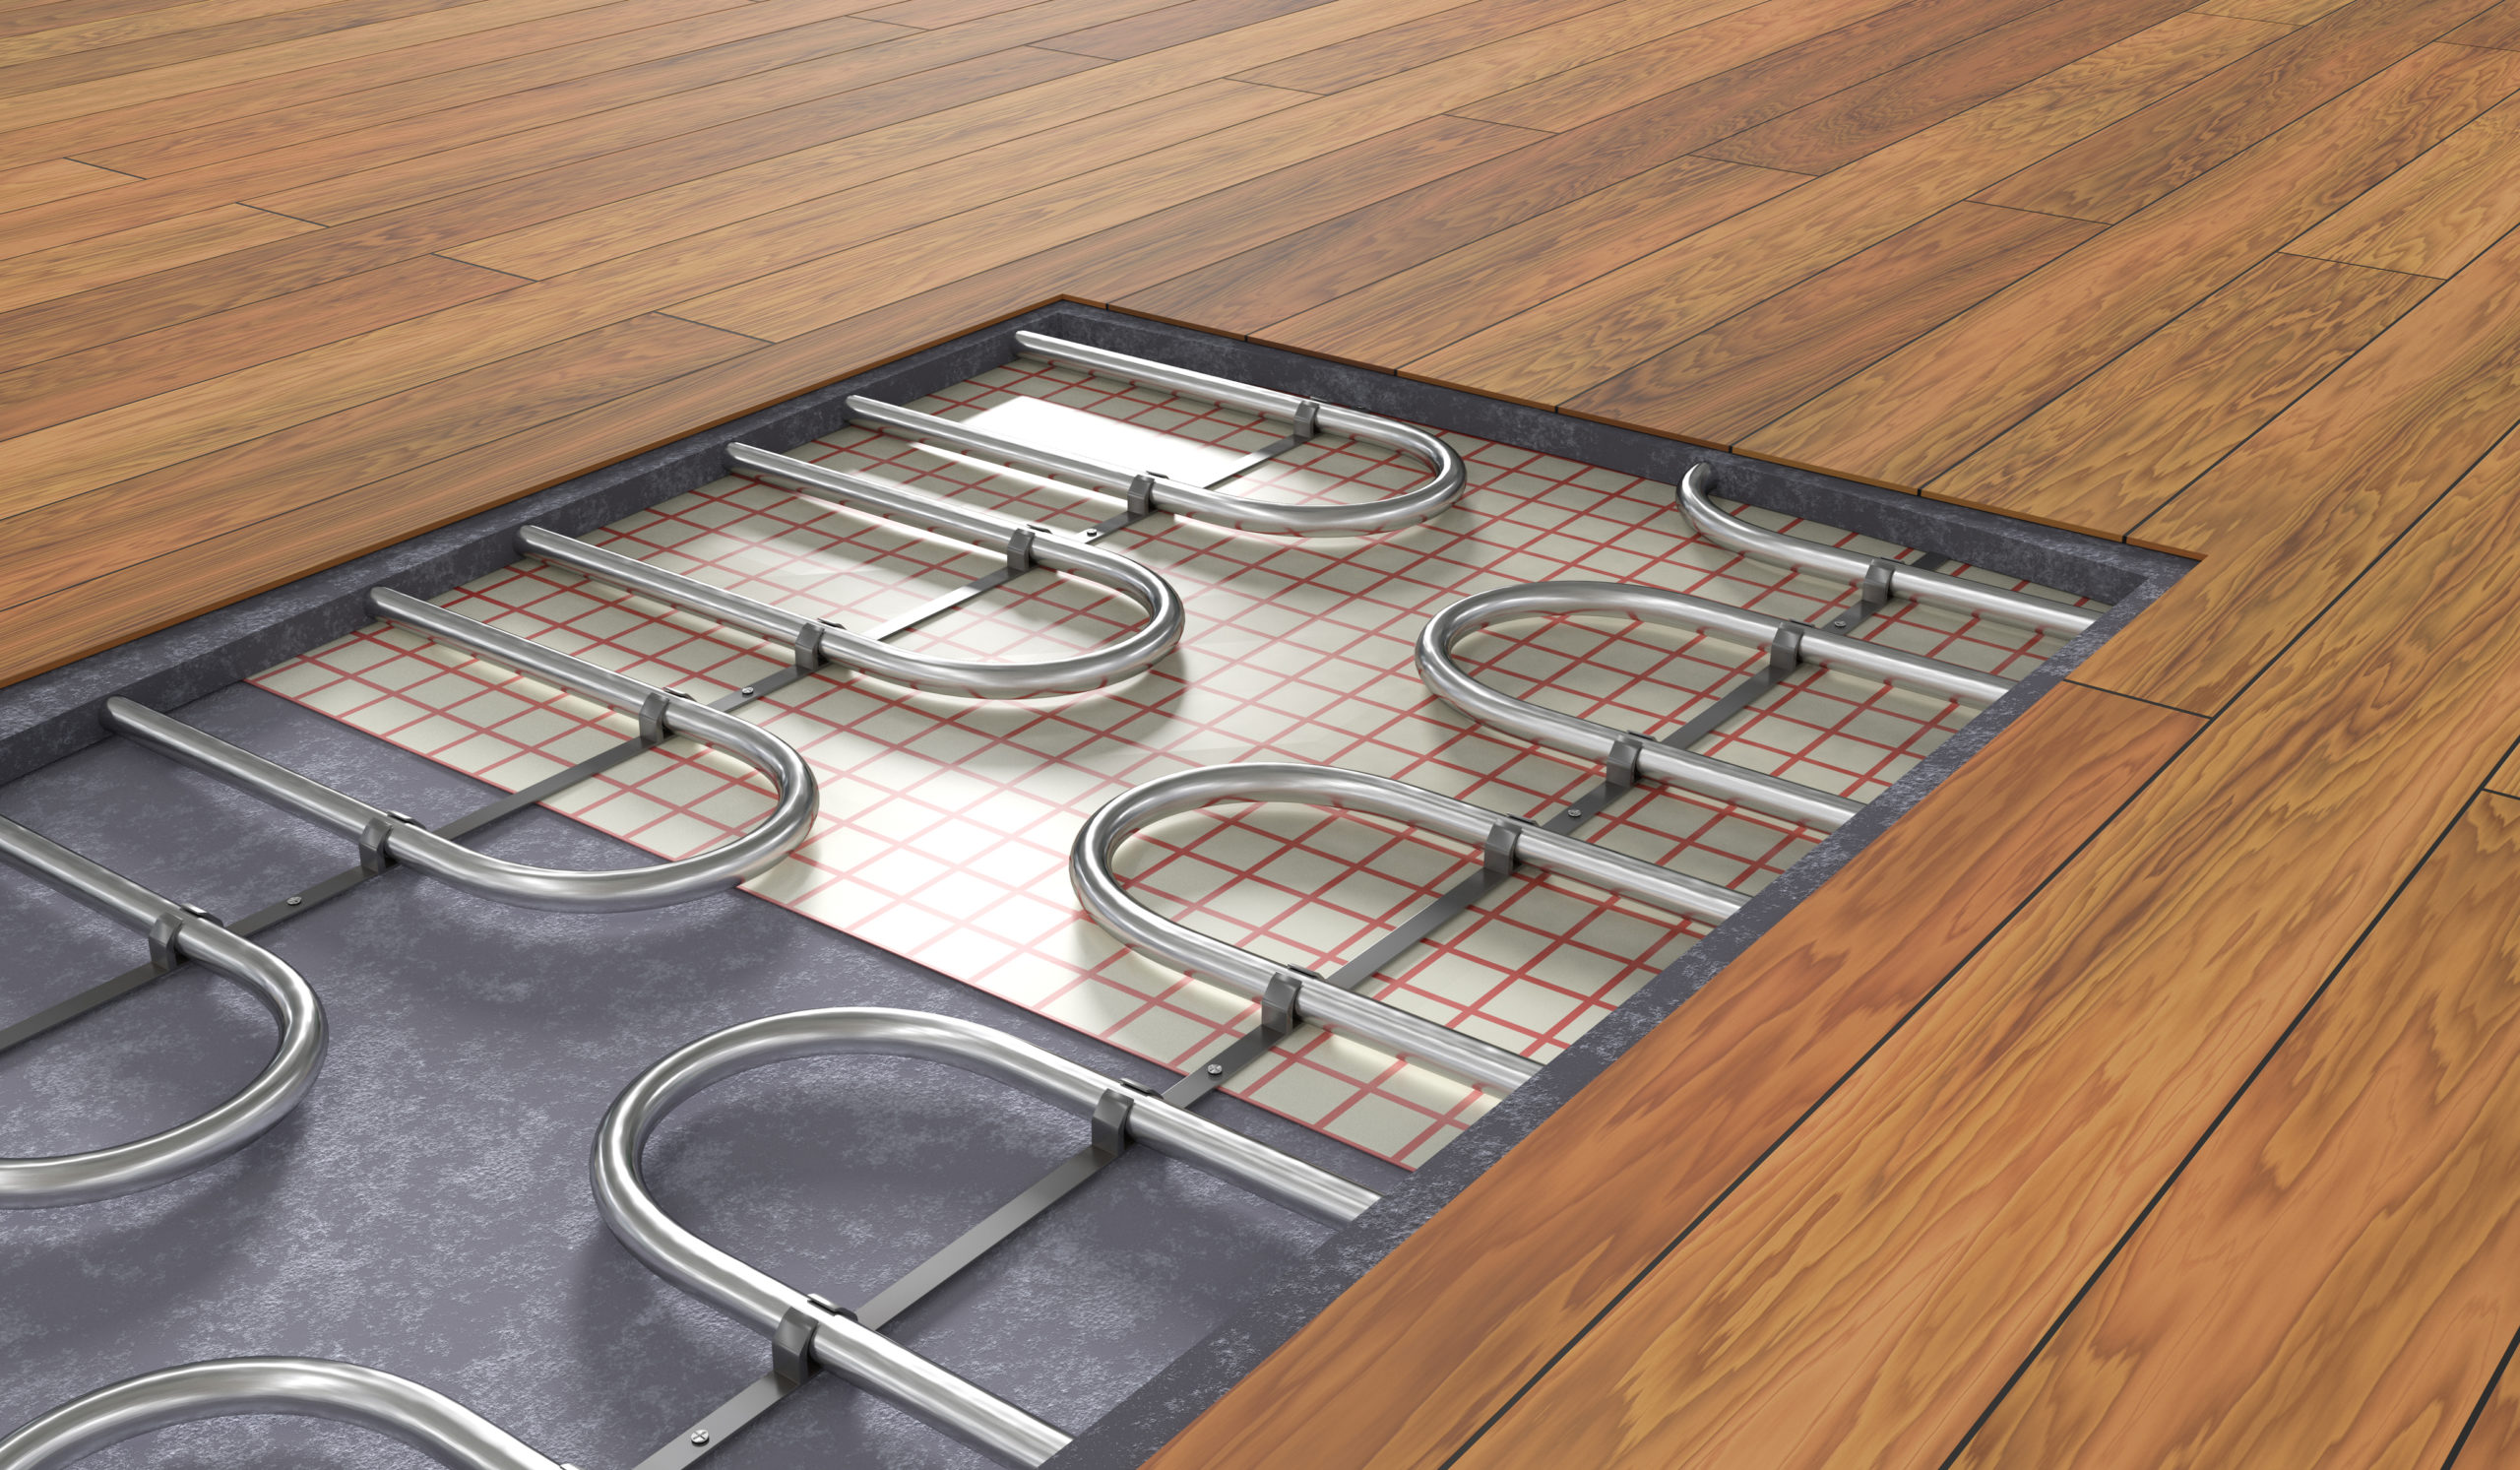 Underfloor heating system under wooden floor. 3D rendered illustration.